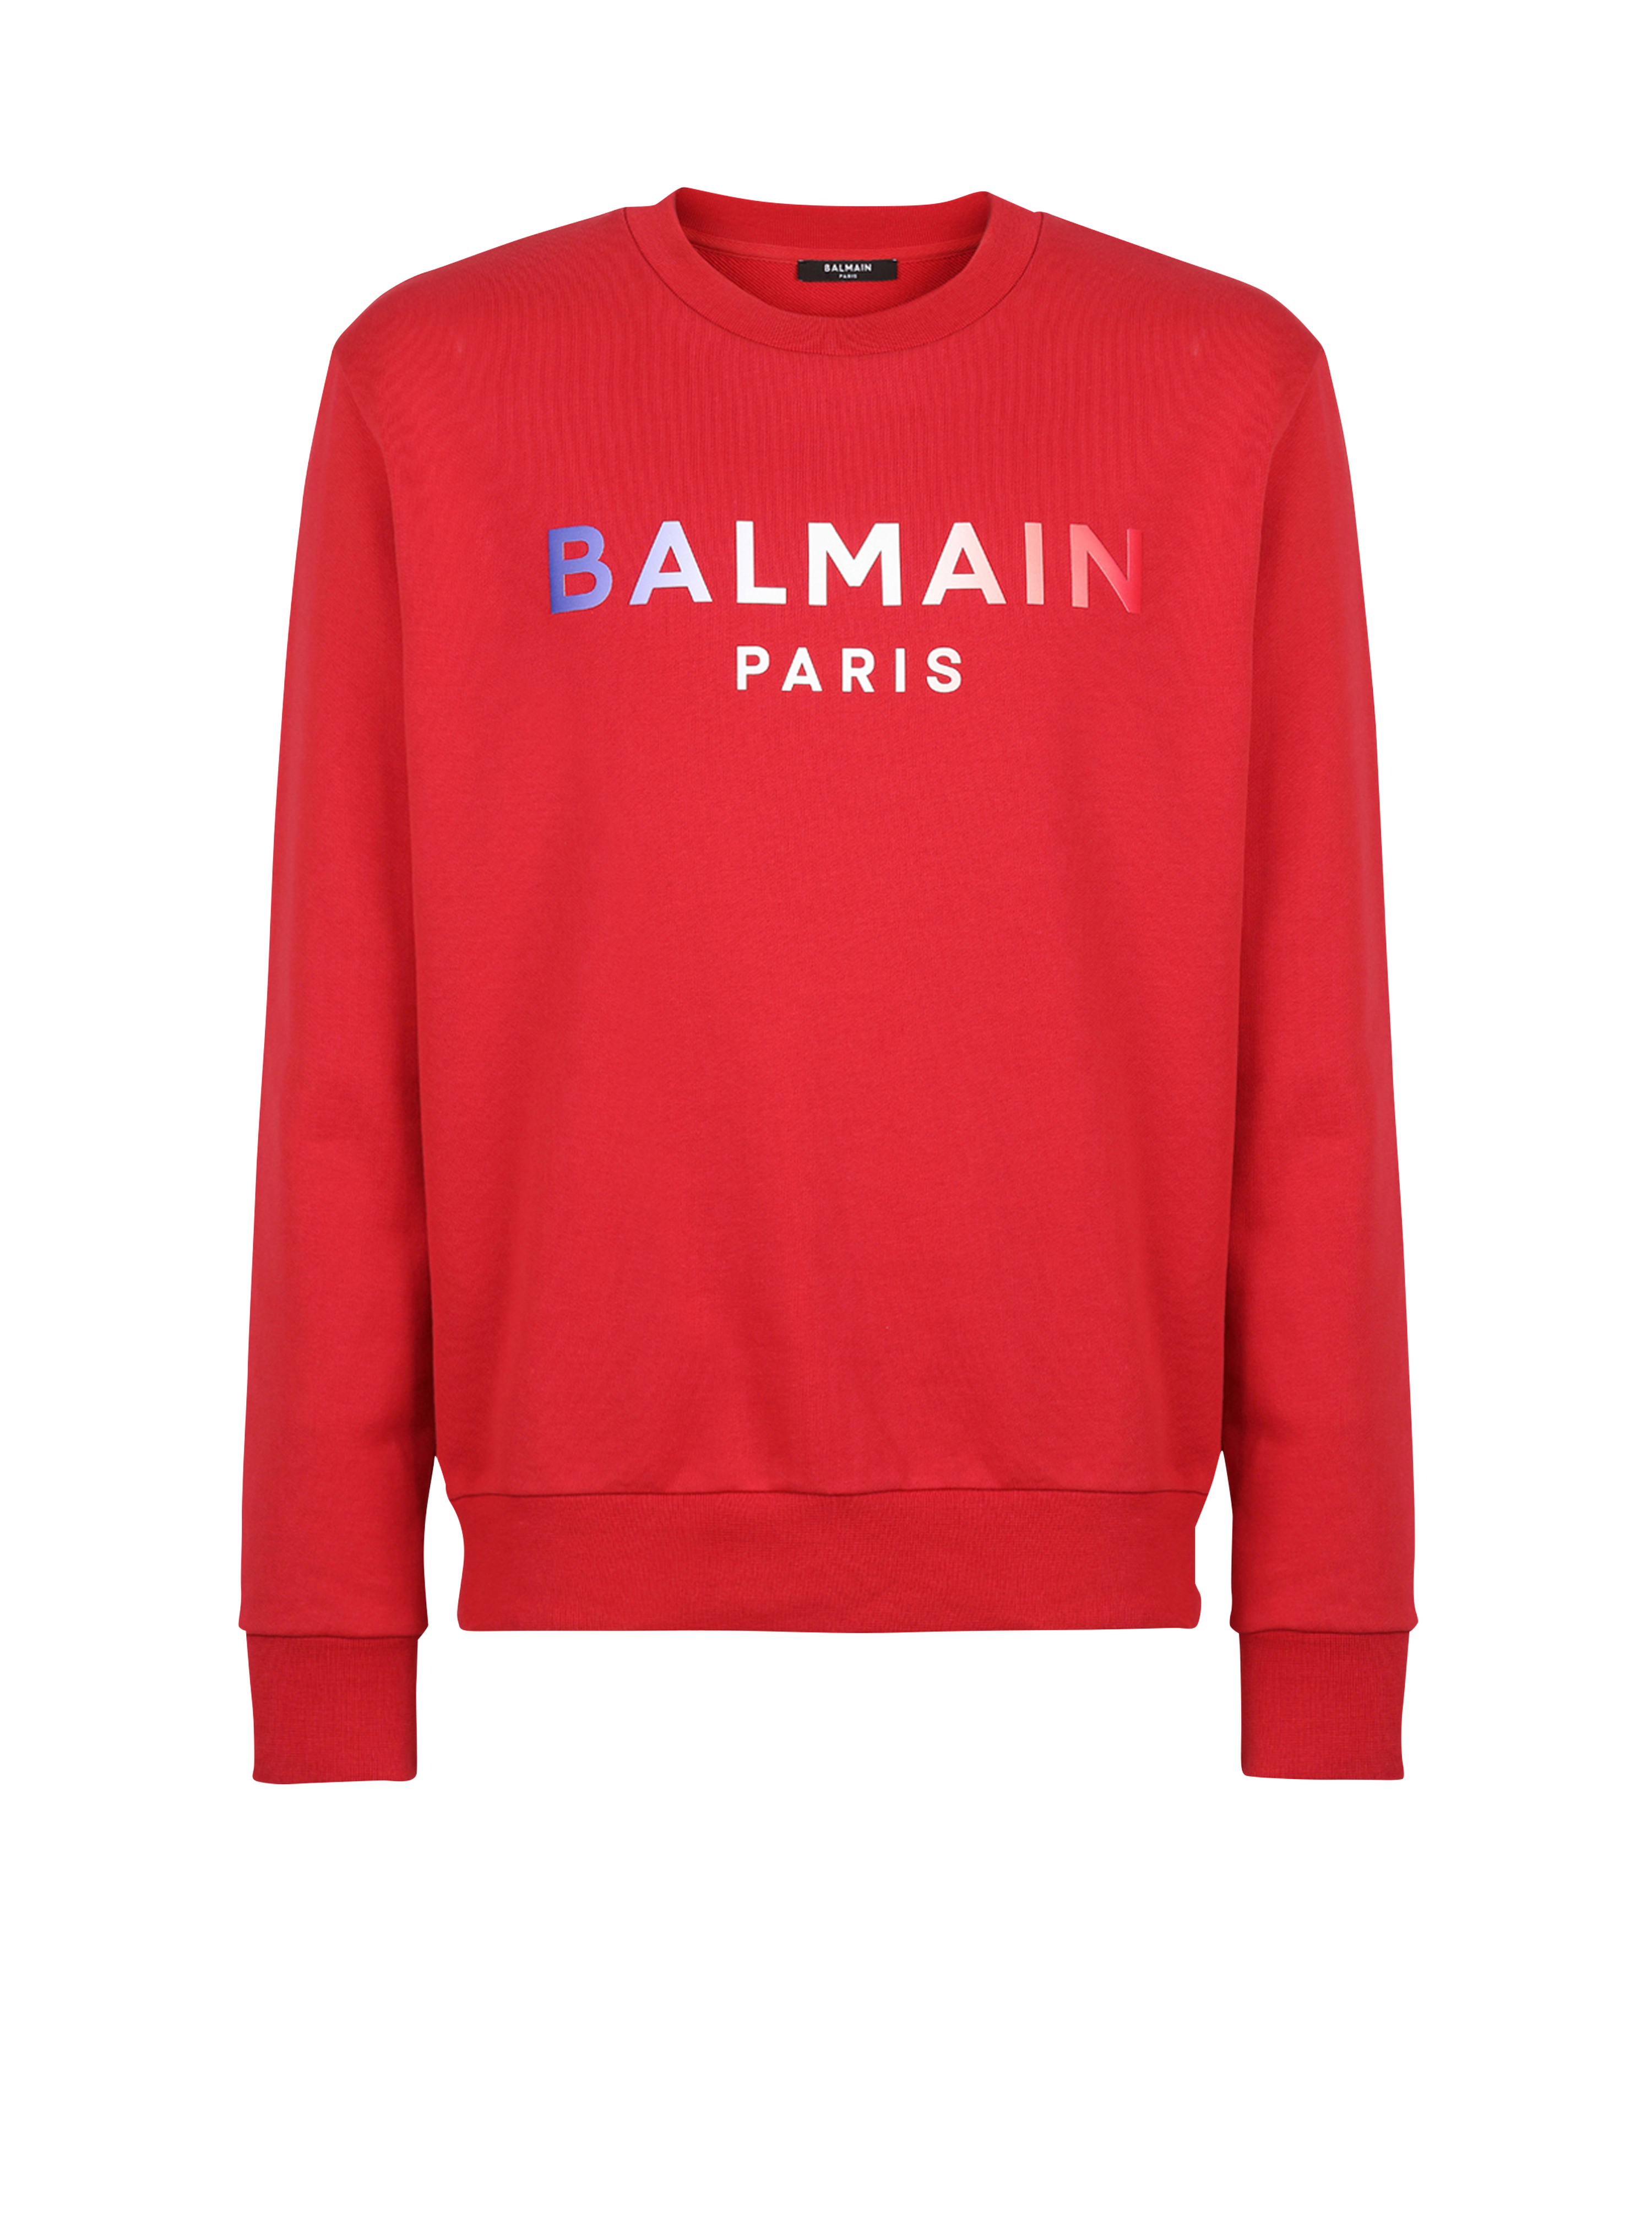 HIGH SUMMER CAPSULE - Cotton sweatshirt with Balmain Paris tie-dye logo print, red